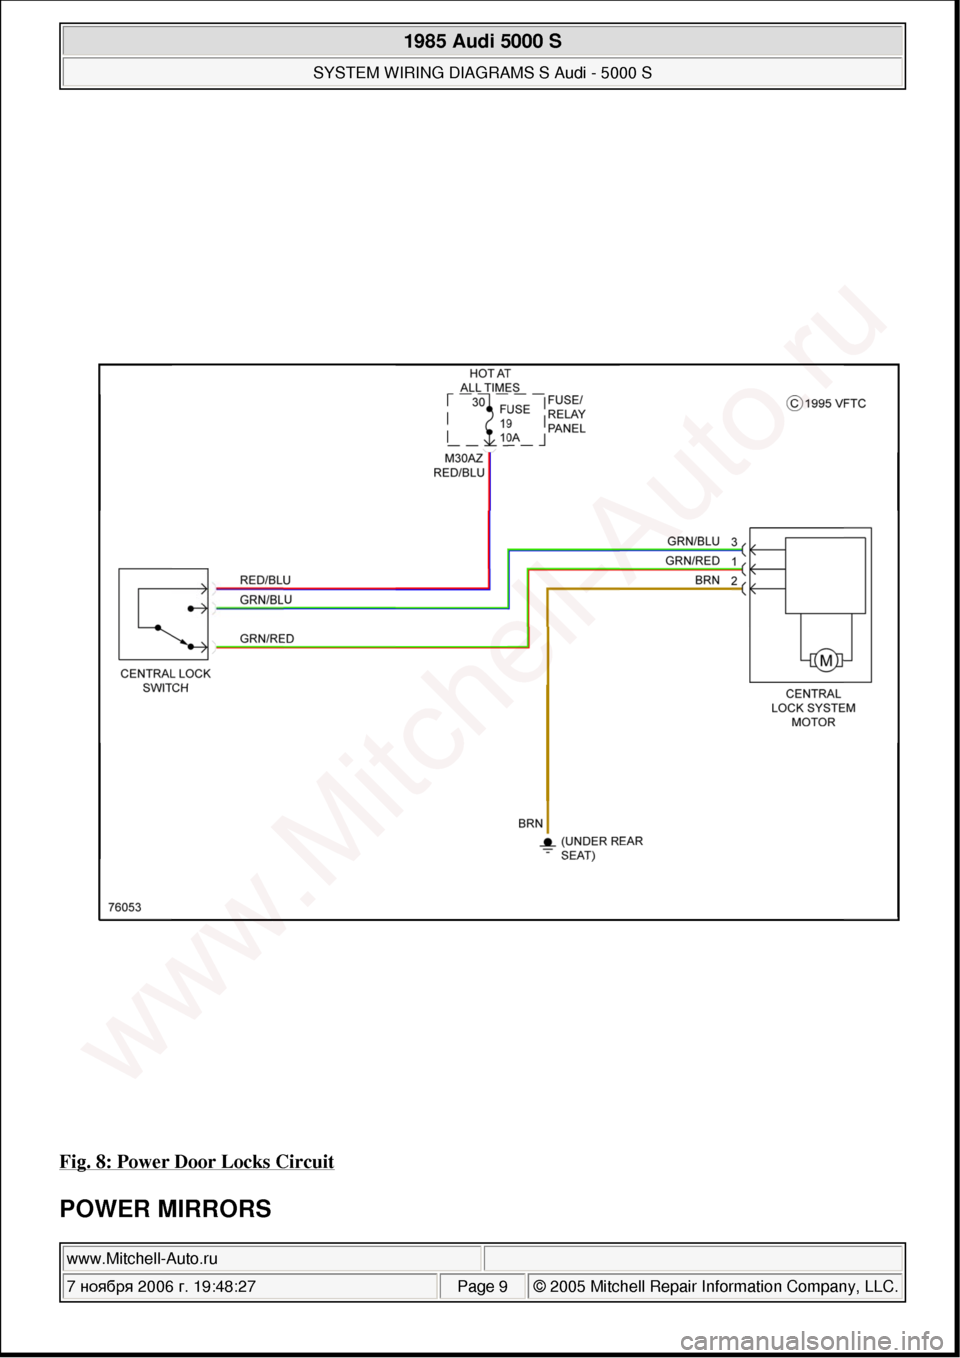 AUDI 5000S 1985 C2 System Wiring Diagram 
Fig. 8: Power Door Locks Circuit 
POWER MIRRORS 
 
1985 Audi 5000 S 
SYSTEM WIRING DIAGRAMS S Audi - 5000 S  
www.Mitchell-Auto.ru  
7 ноября  2006 г. 19:48:27Page 9 © 2005 Mitchell Repair In